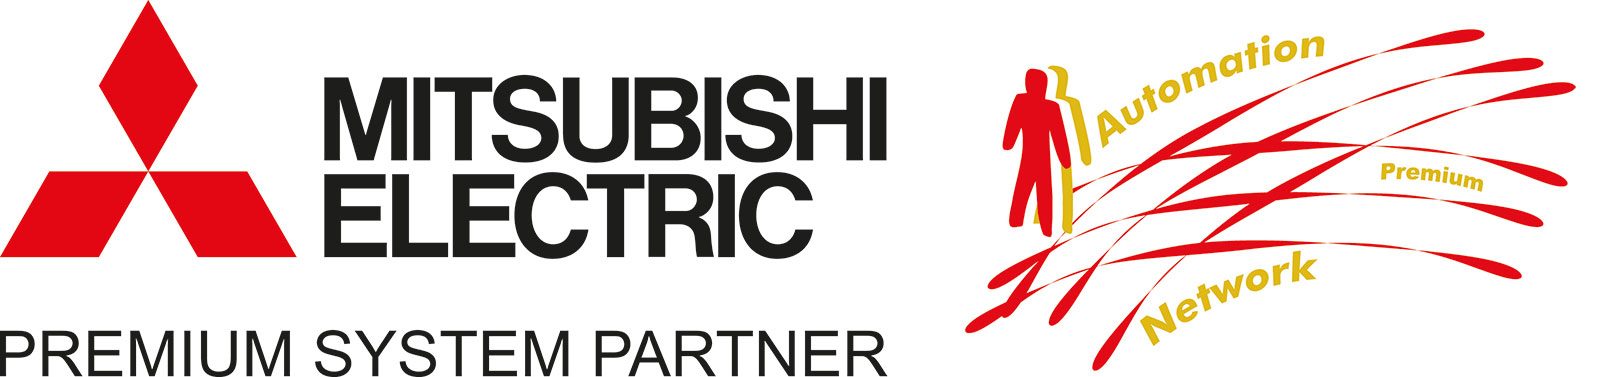 Logos Mitsubishi und Automation Network